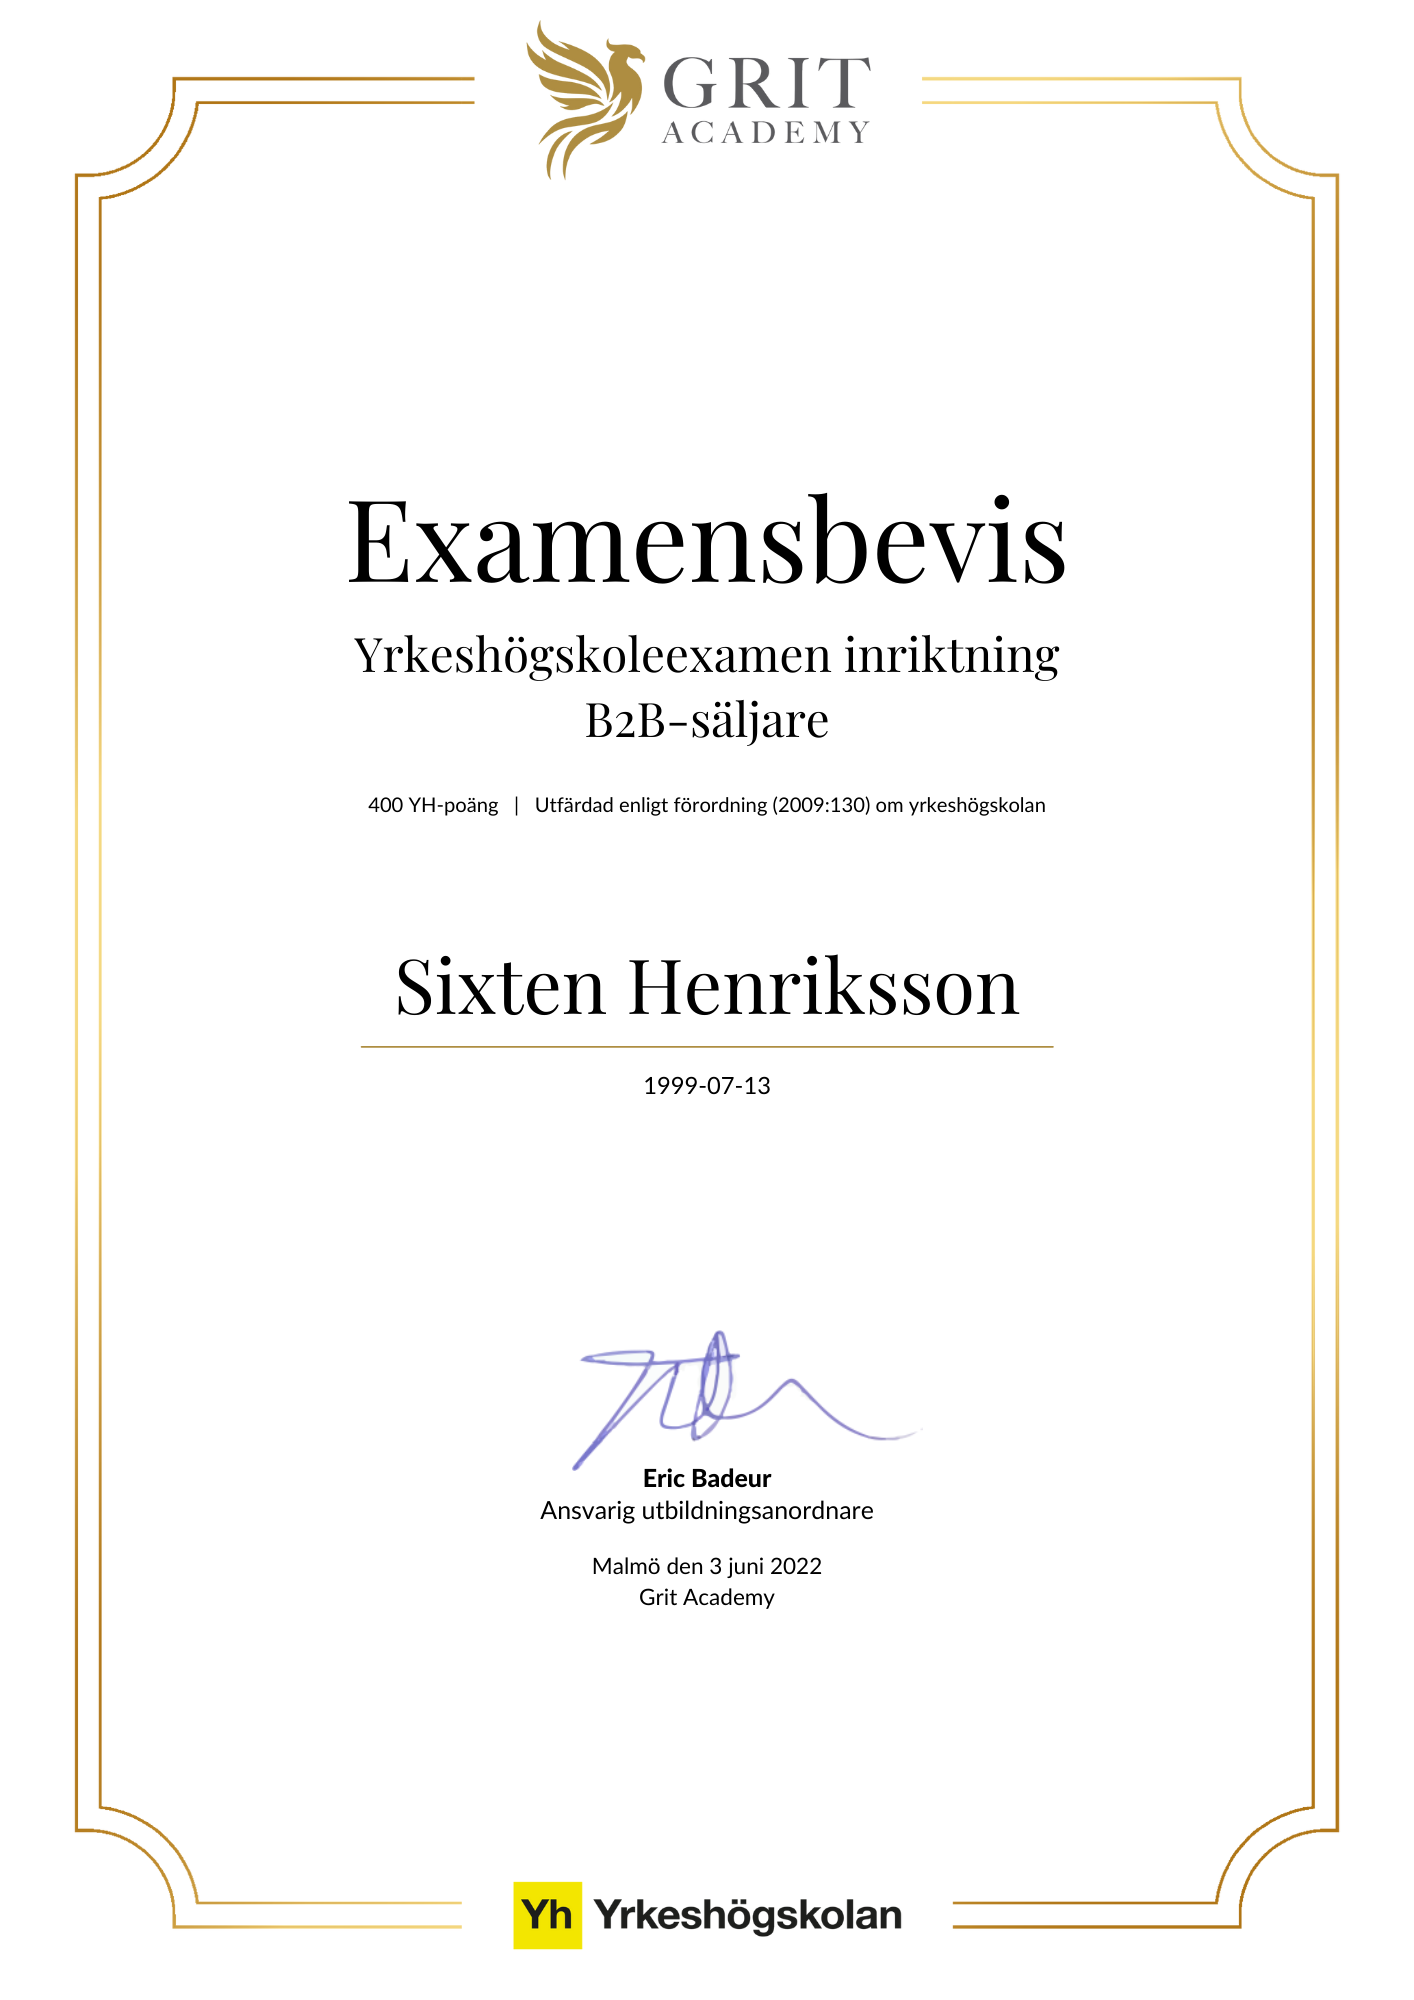 Examensbevis Sixten Henriksson - 1